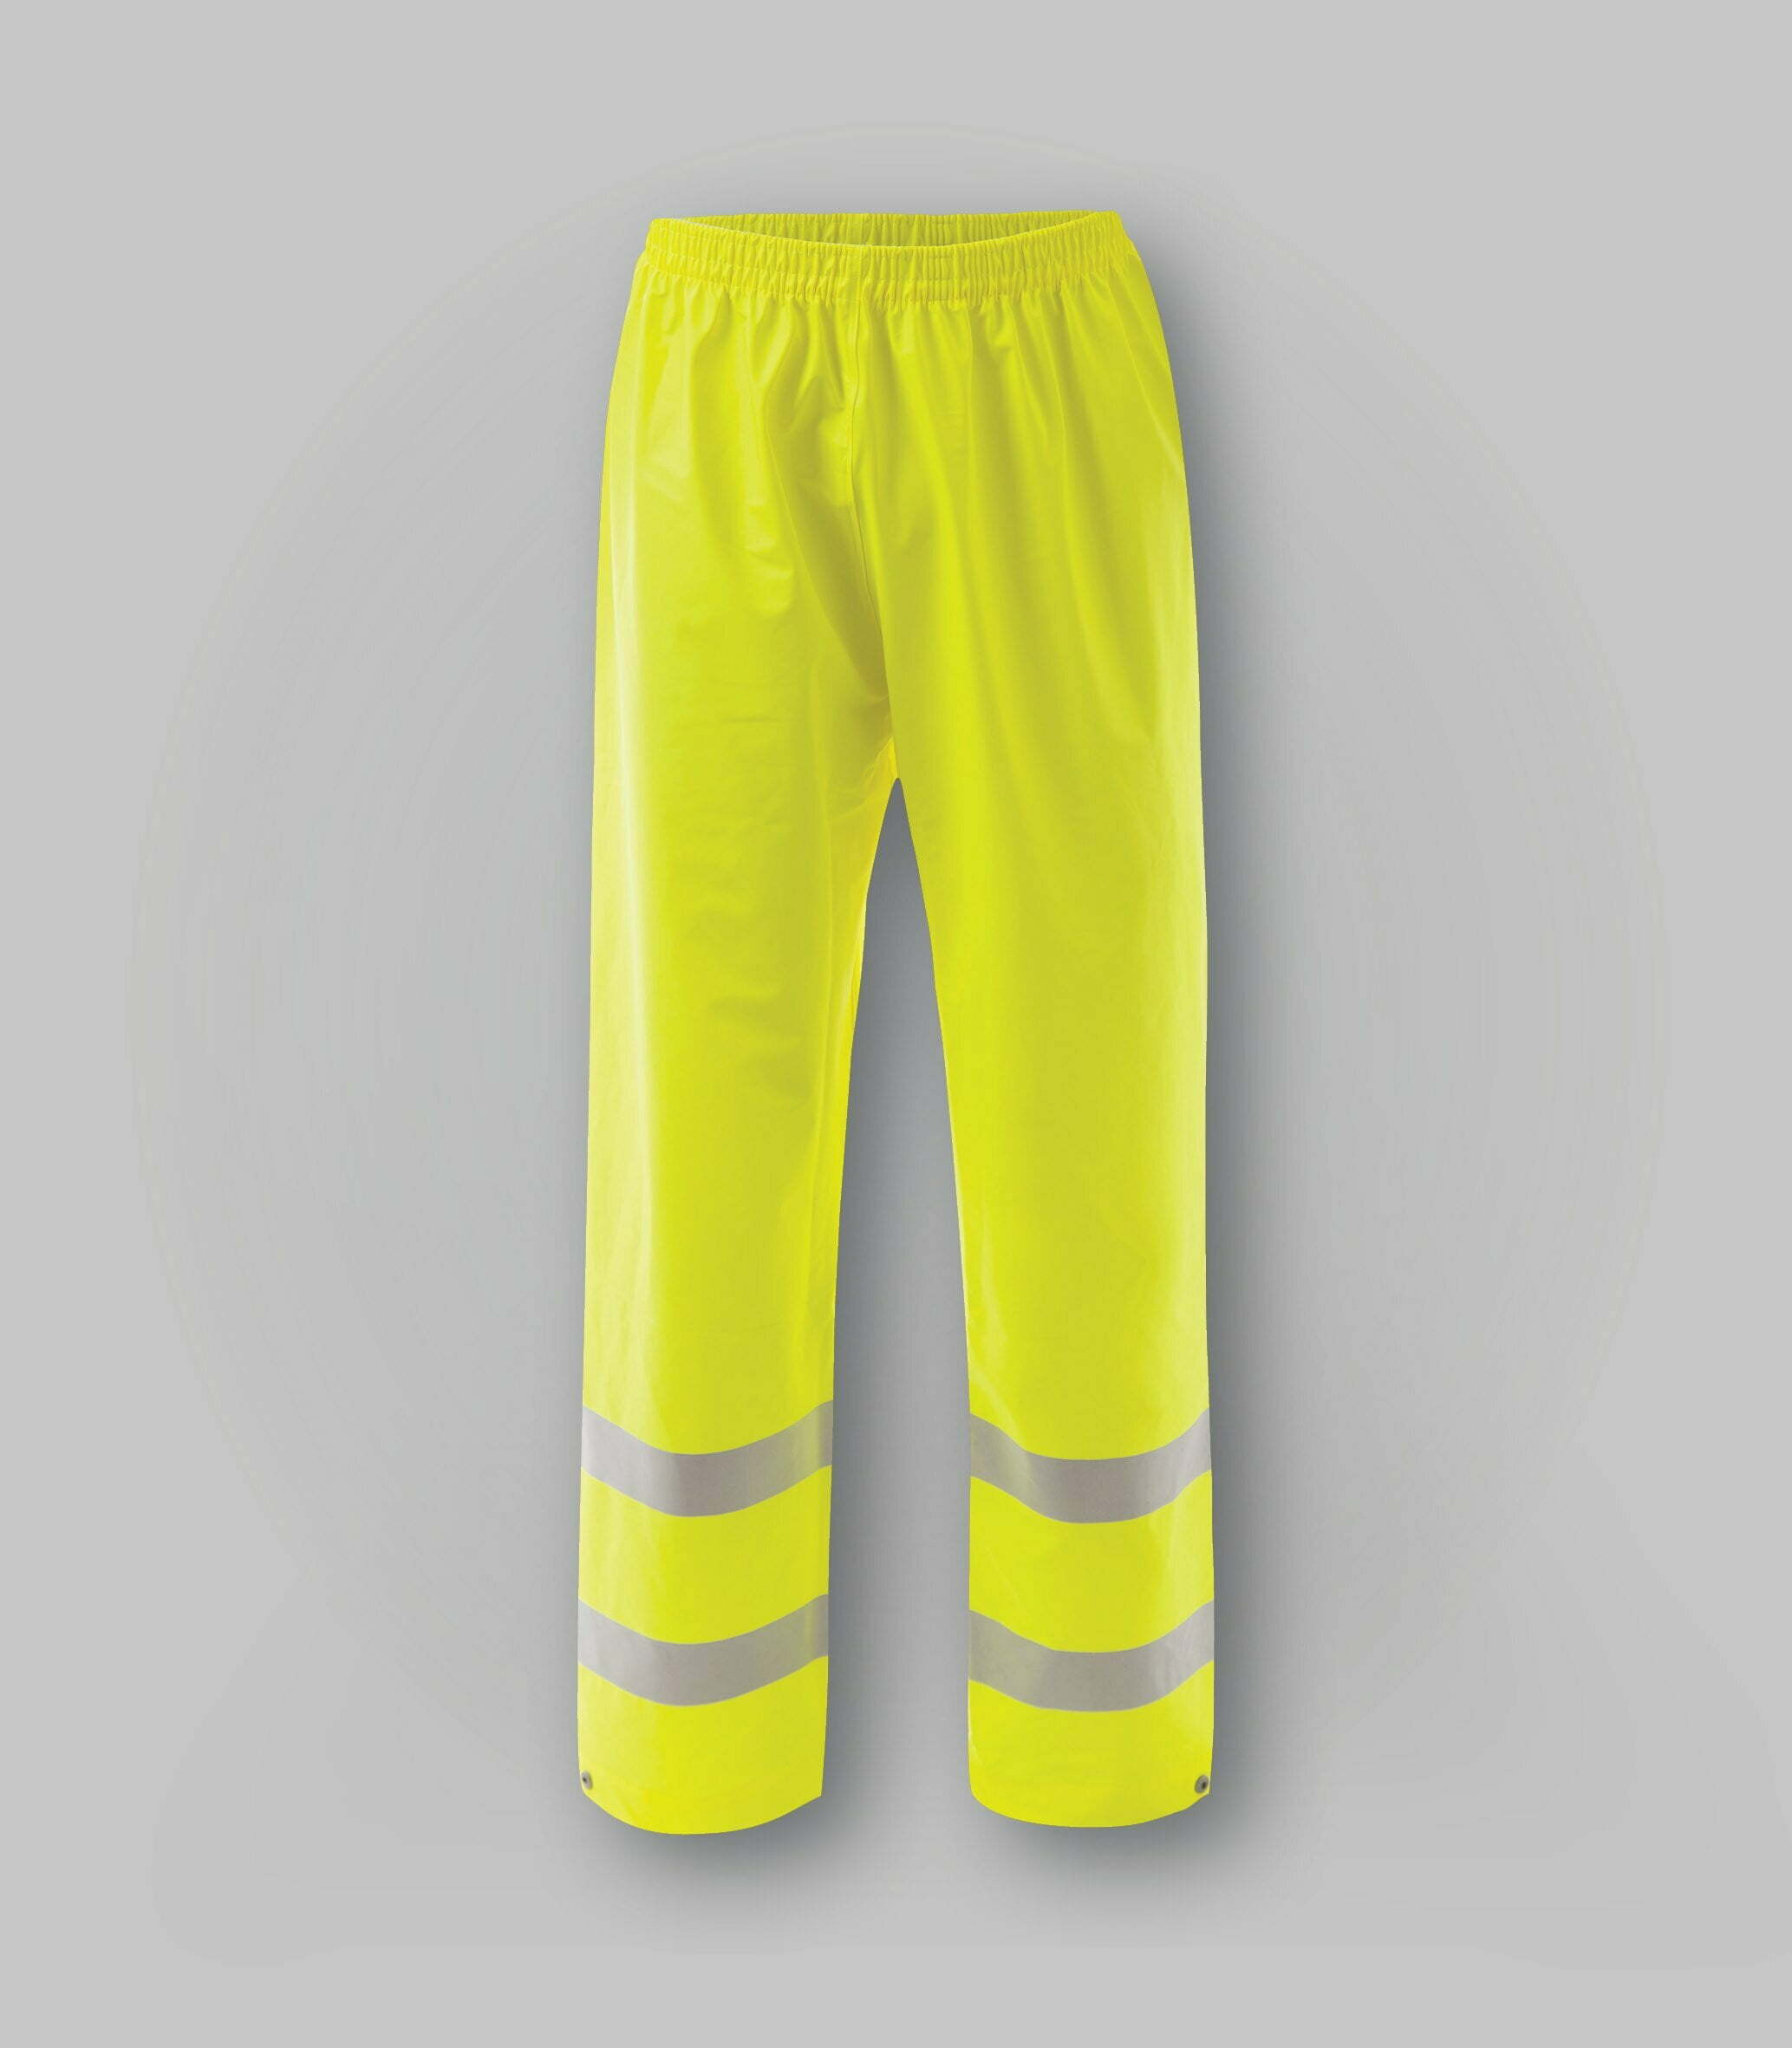 Pantaloni impermeabili, ignifughi ad alta visibilità | POFR43.GI